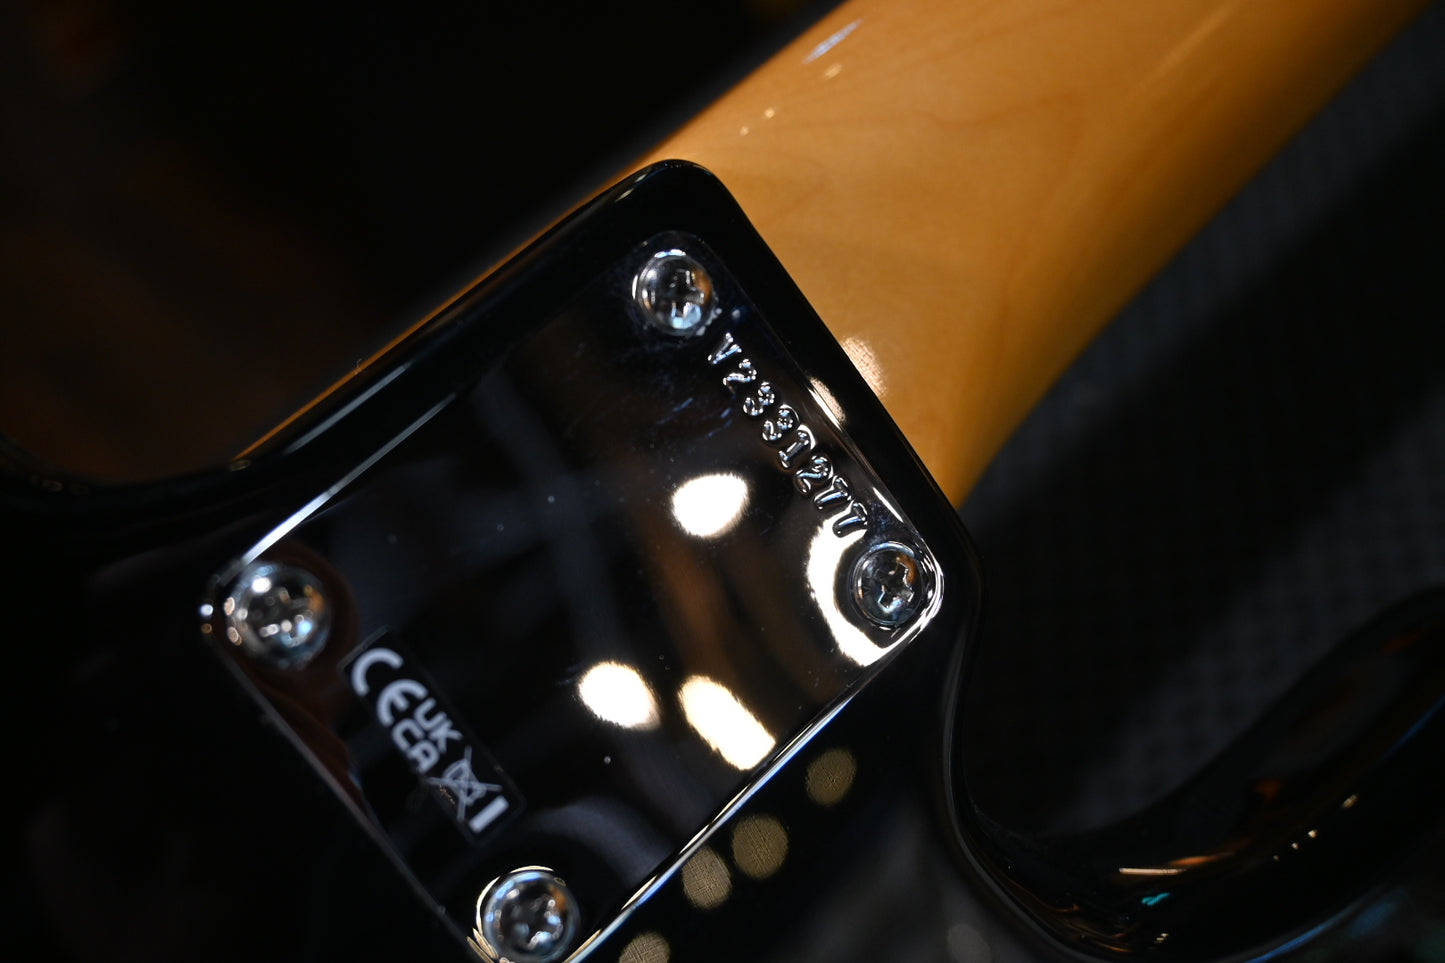 Fender American Vintage II 1960 Precision Bass - Black Guitar #1277